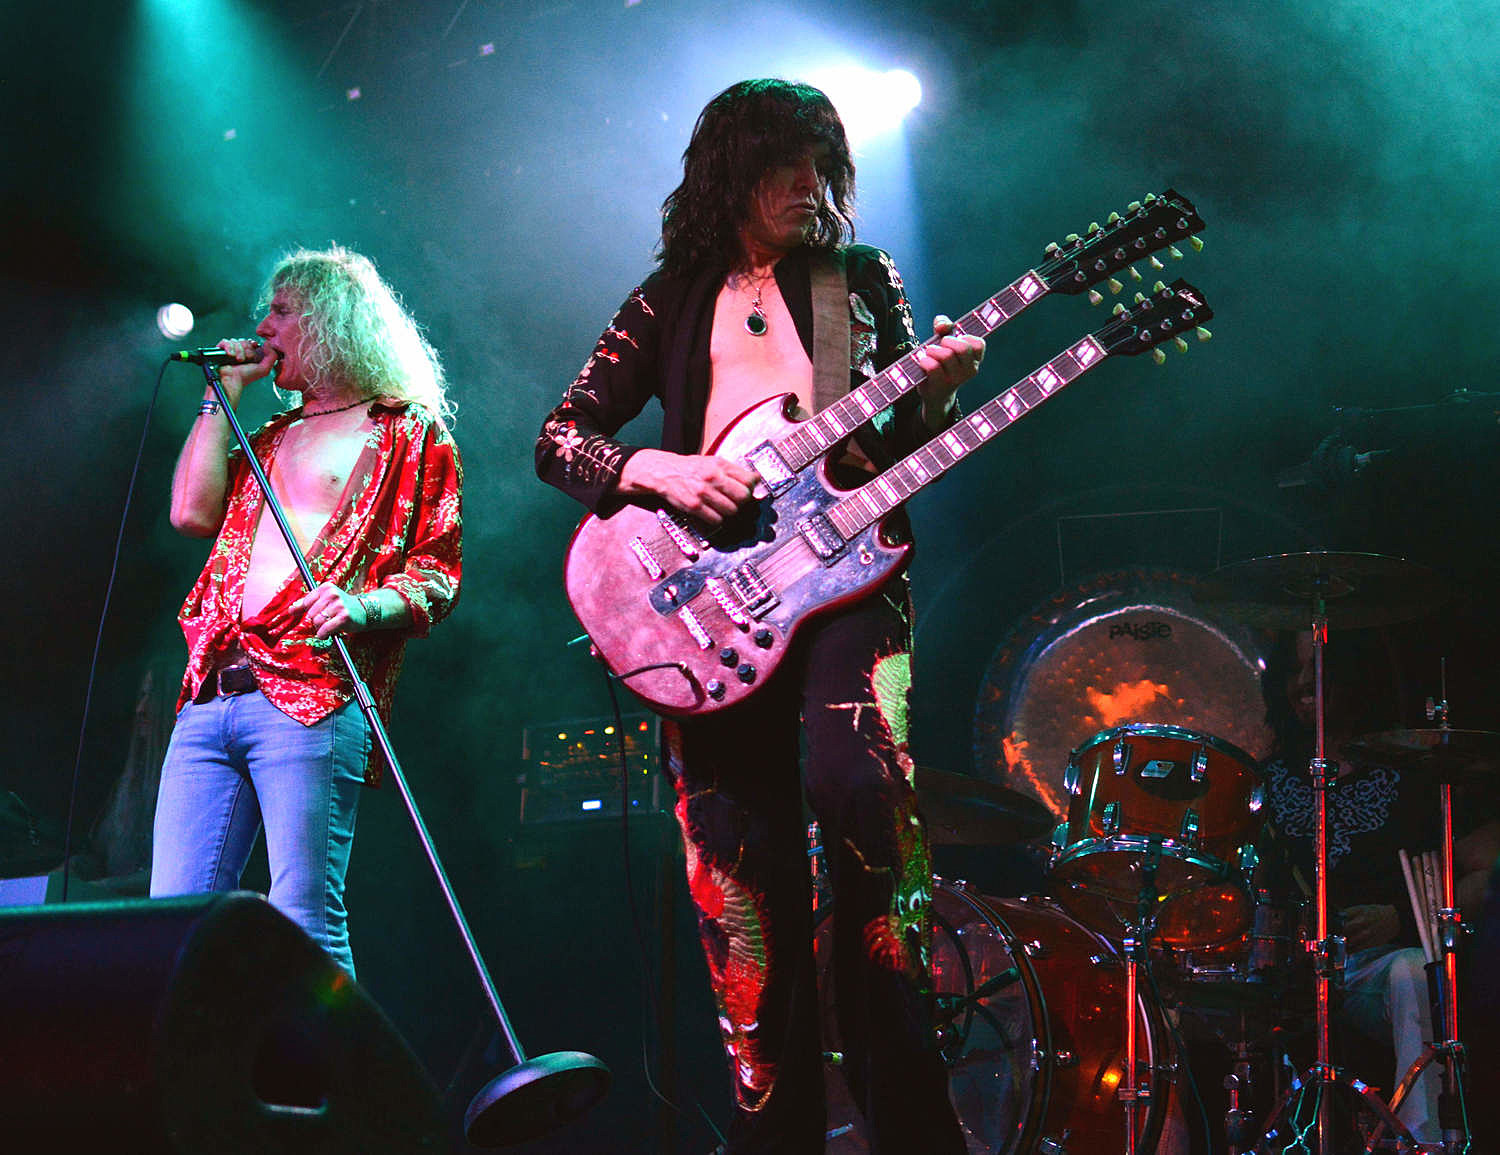 Killer Led Zeppelin Tribute Band Plays Davenport This Week